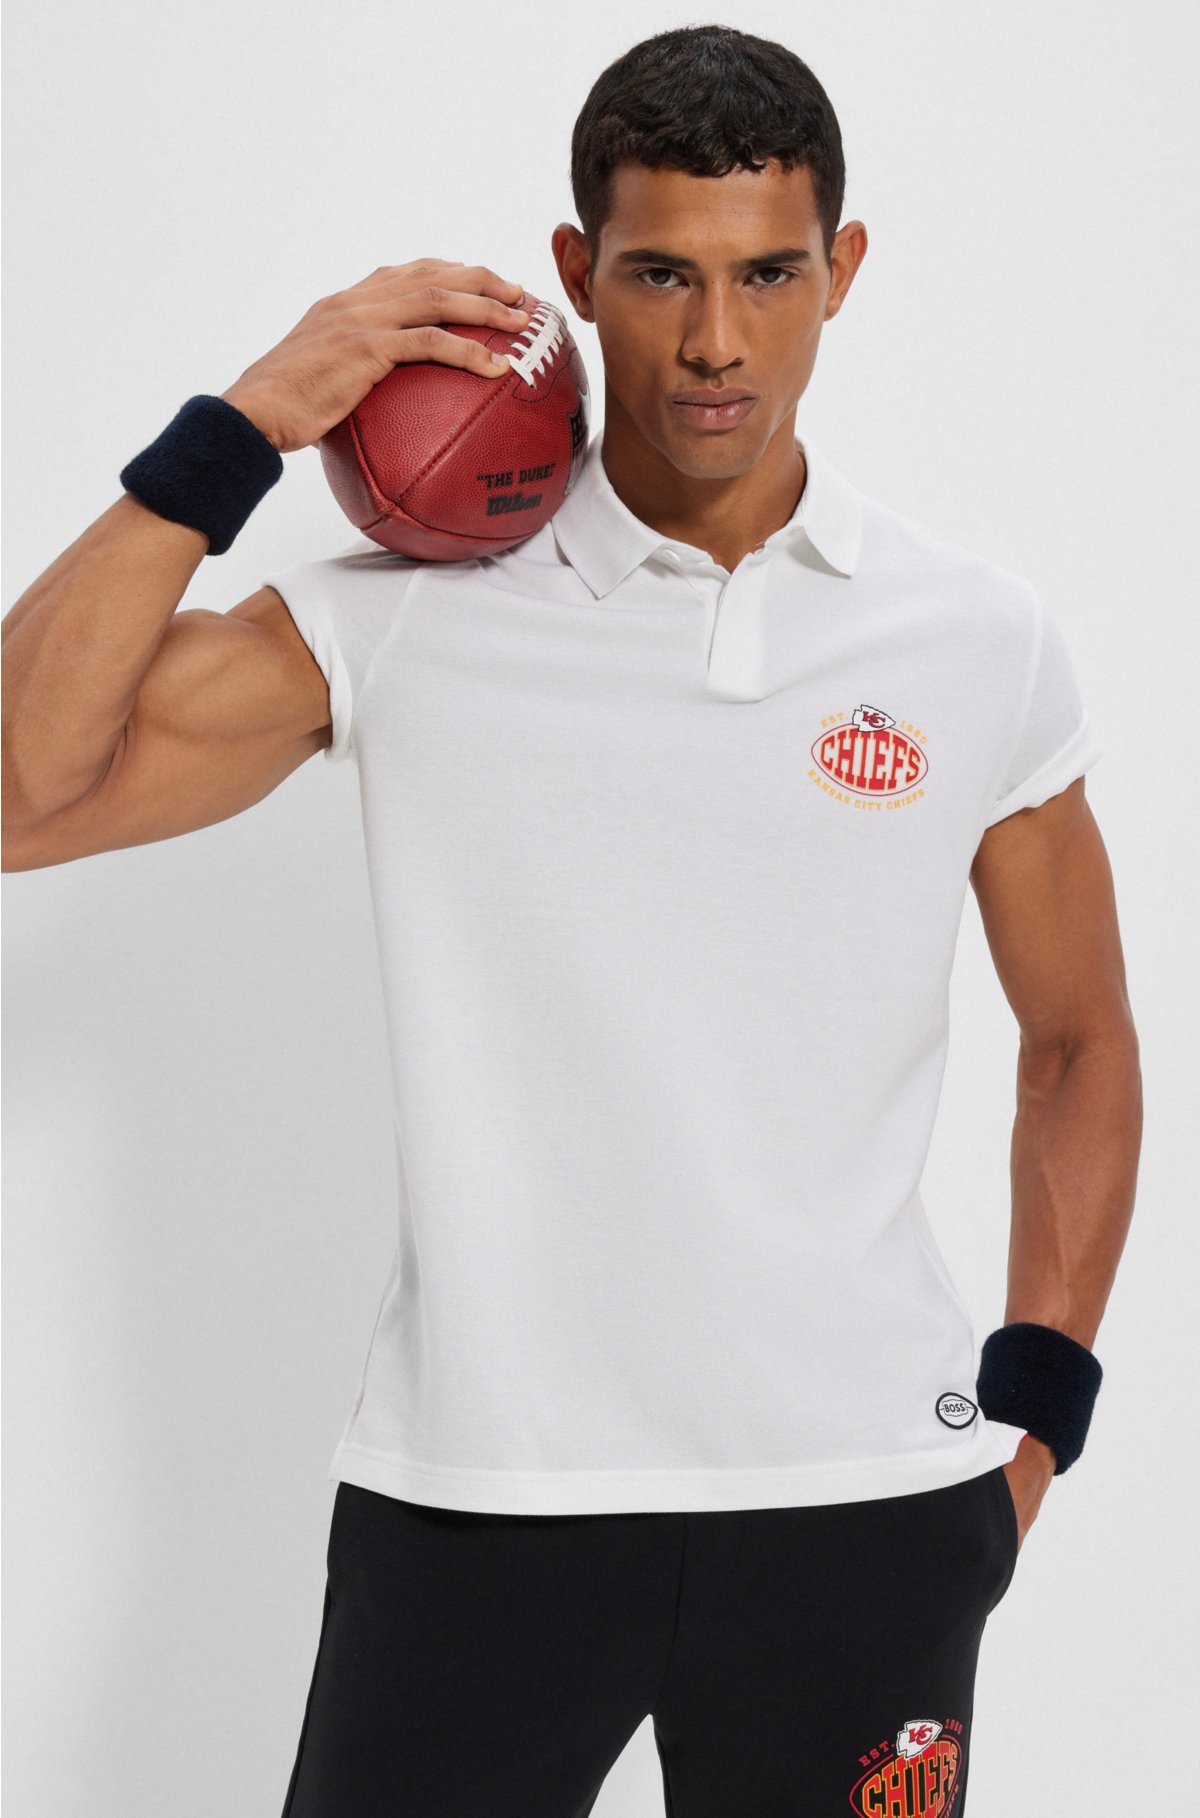 BOSS x NFL cotton-piqué polo shirt with collaborative branding, Chiefs